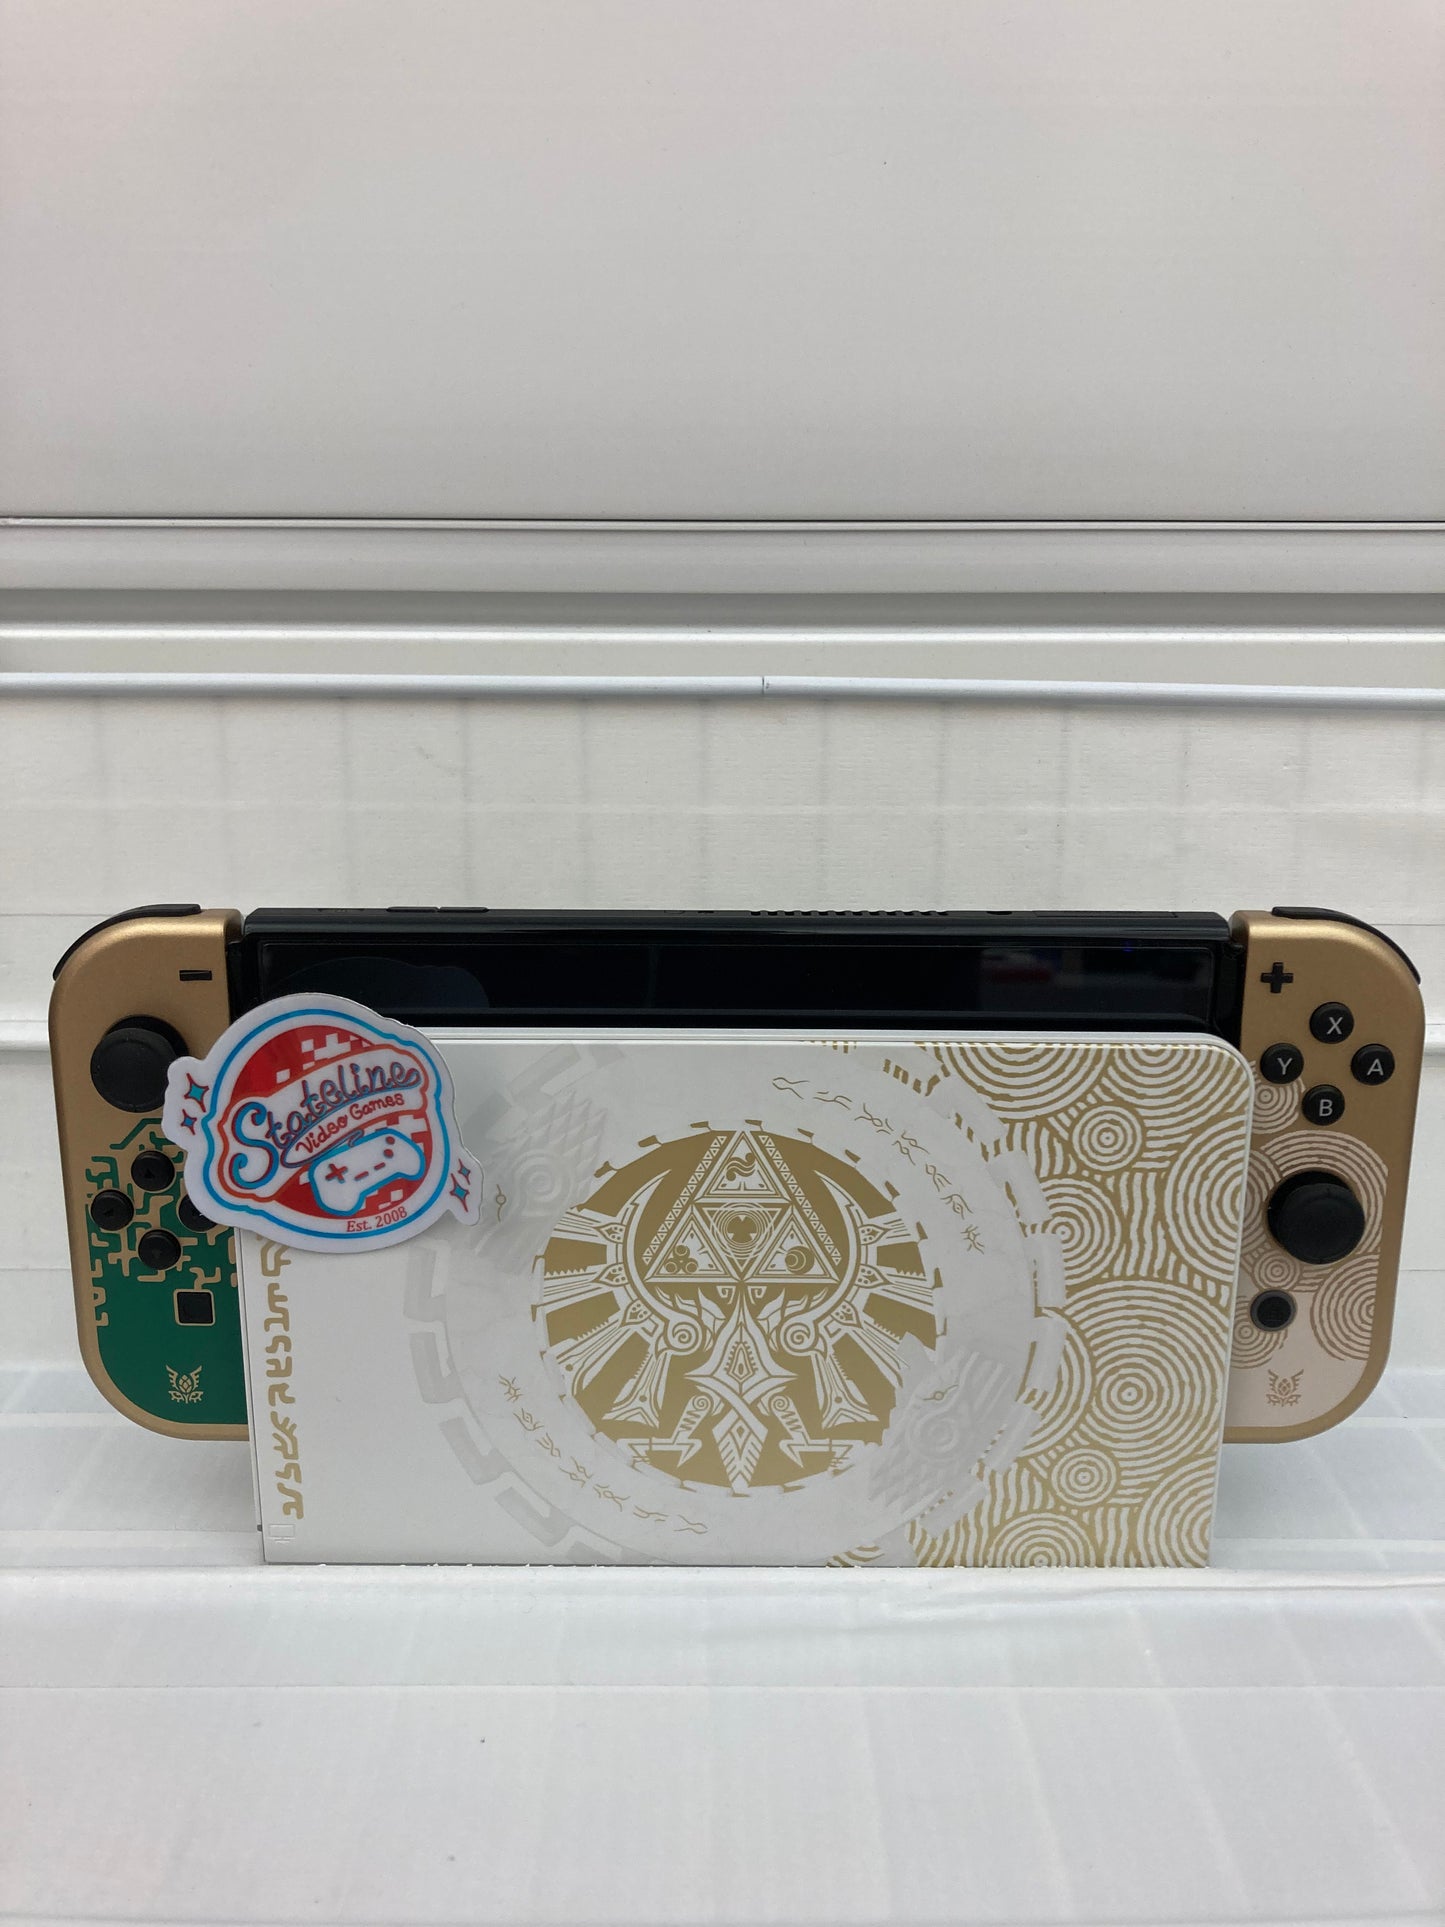 Nintendo Switch OLED Console - Nintendo Switch